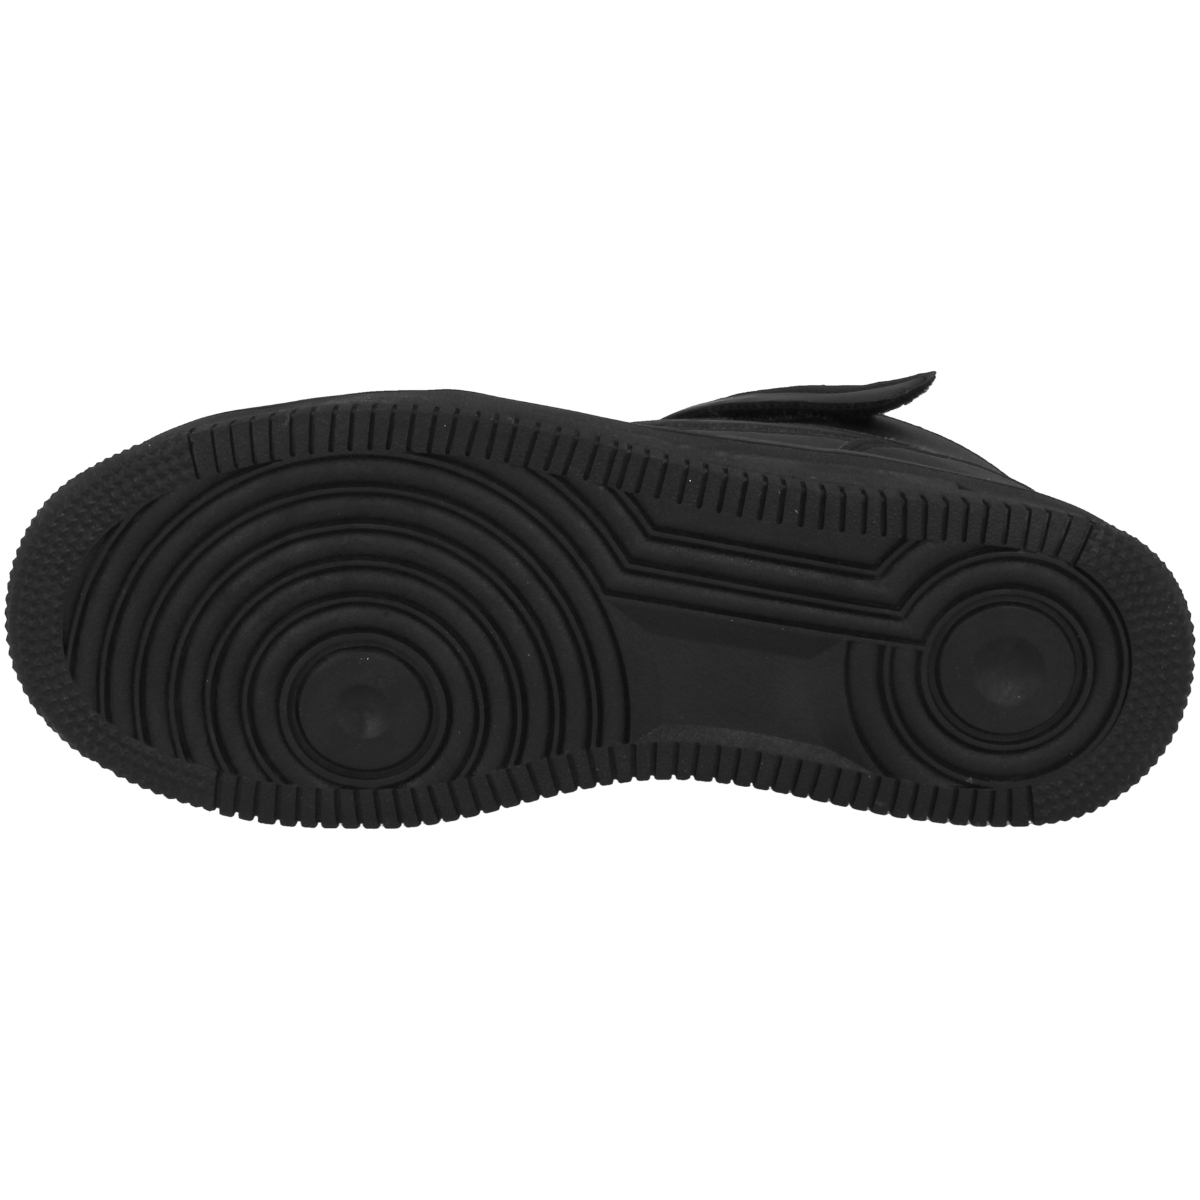 KangaROOS Future-Space HI Schuhe schwarz